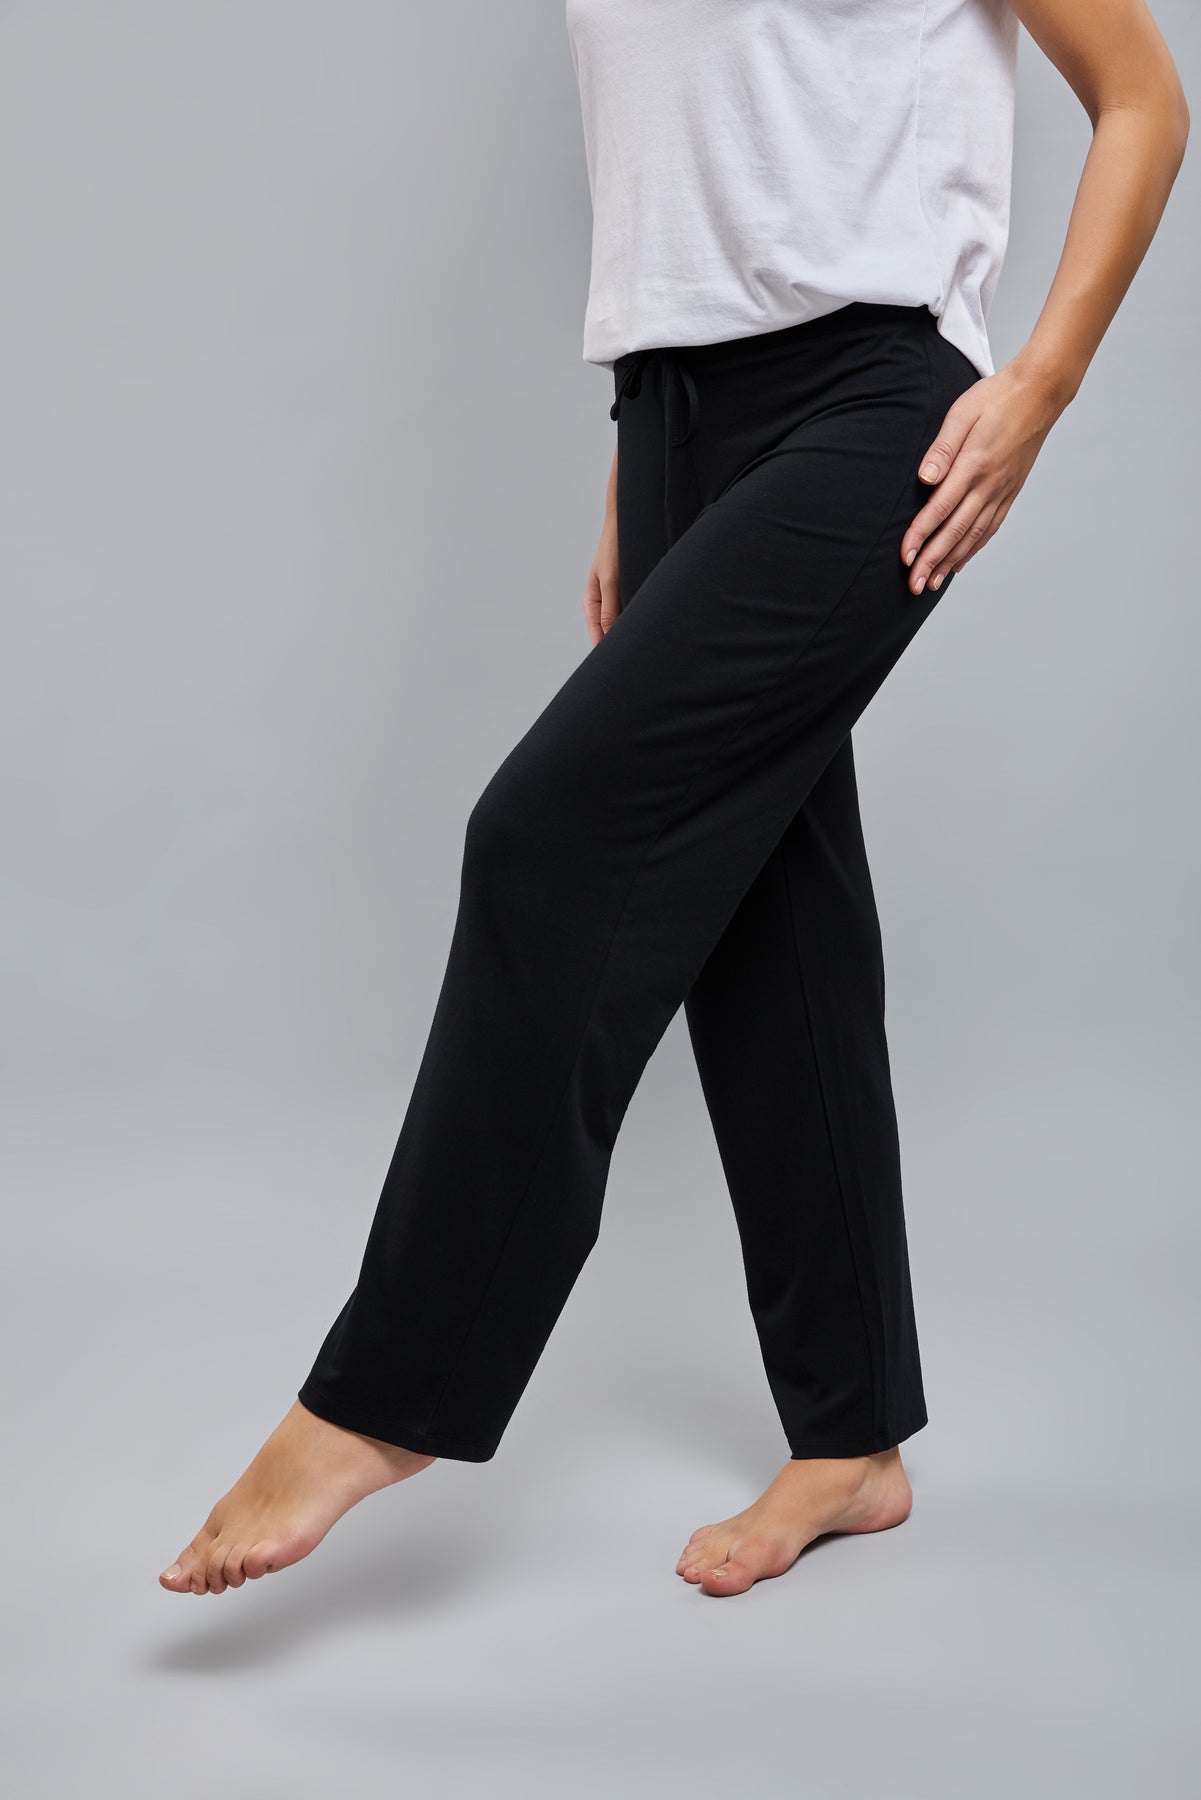 Buy Plus Size Black White Stripe Printed Lounge Pants Online For Women